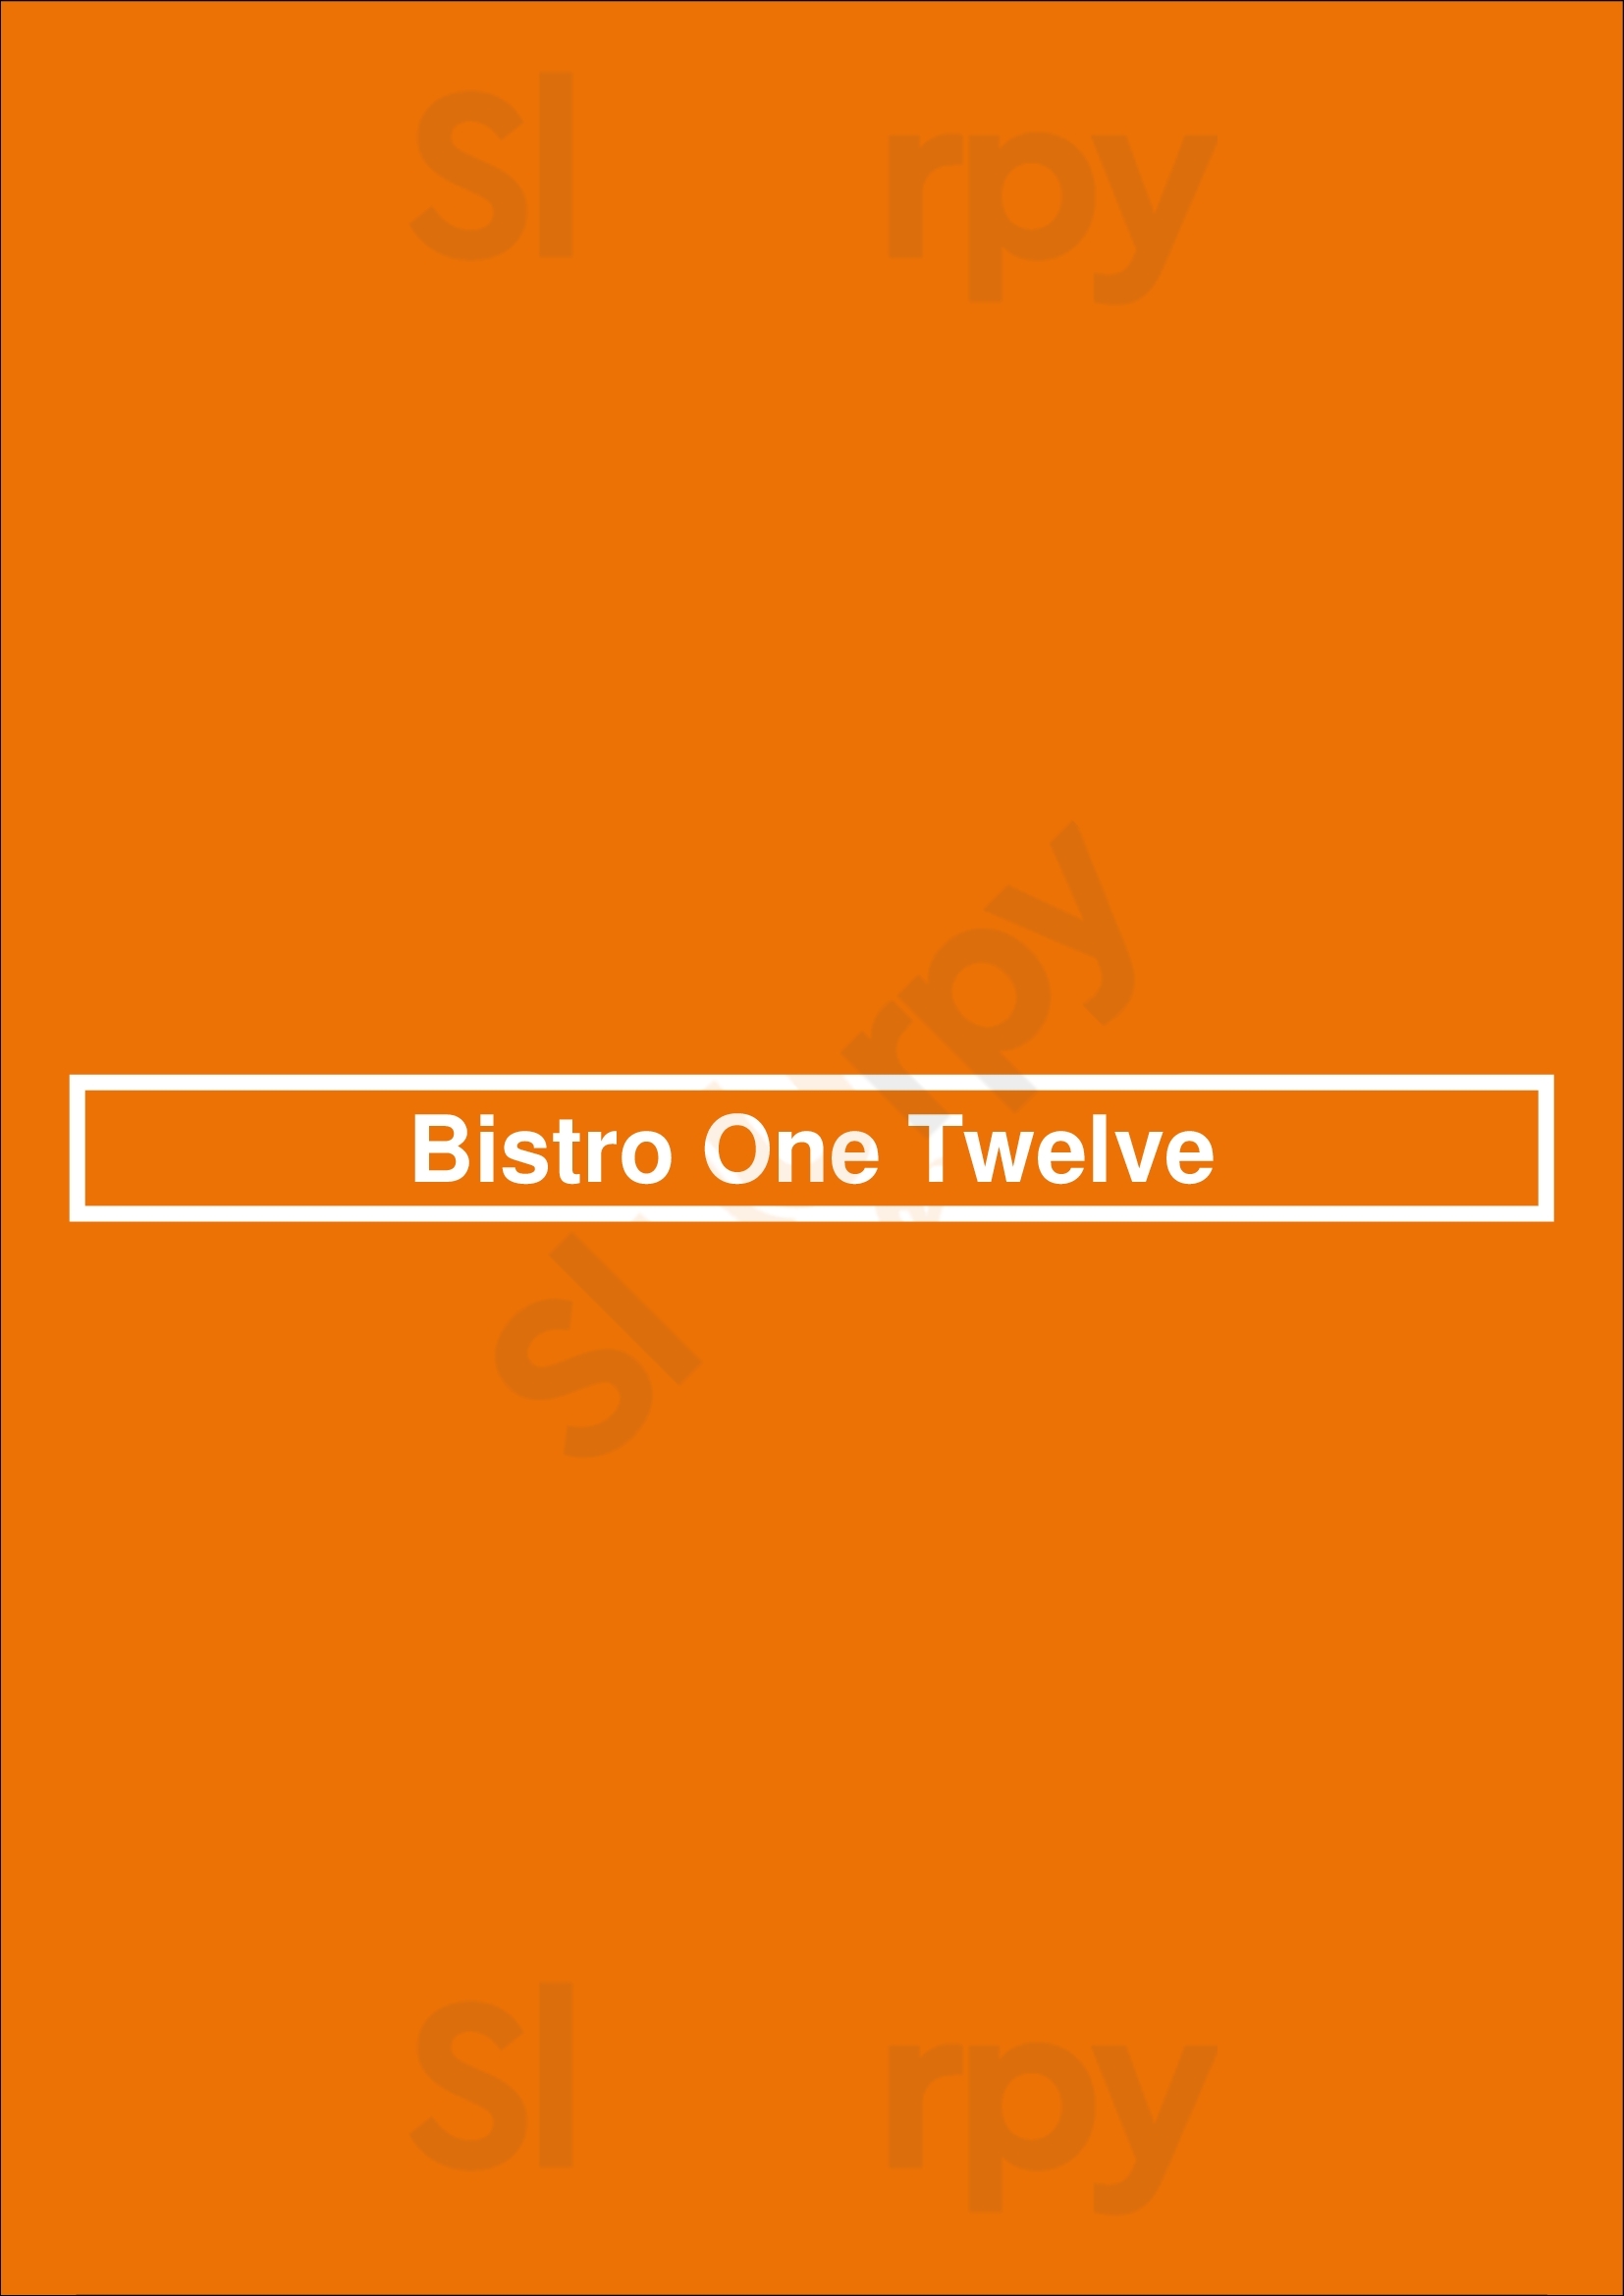 Bistro One Twelve Santa Cruz Menu - 1